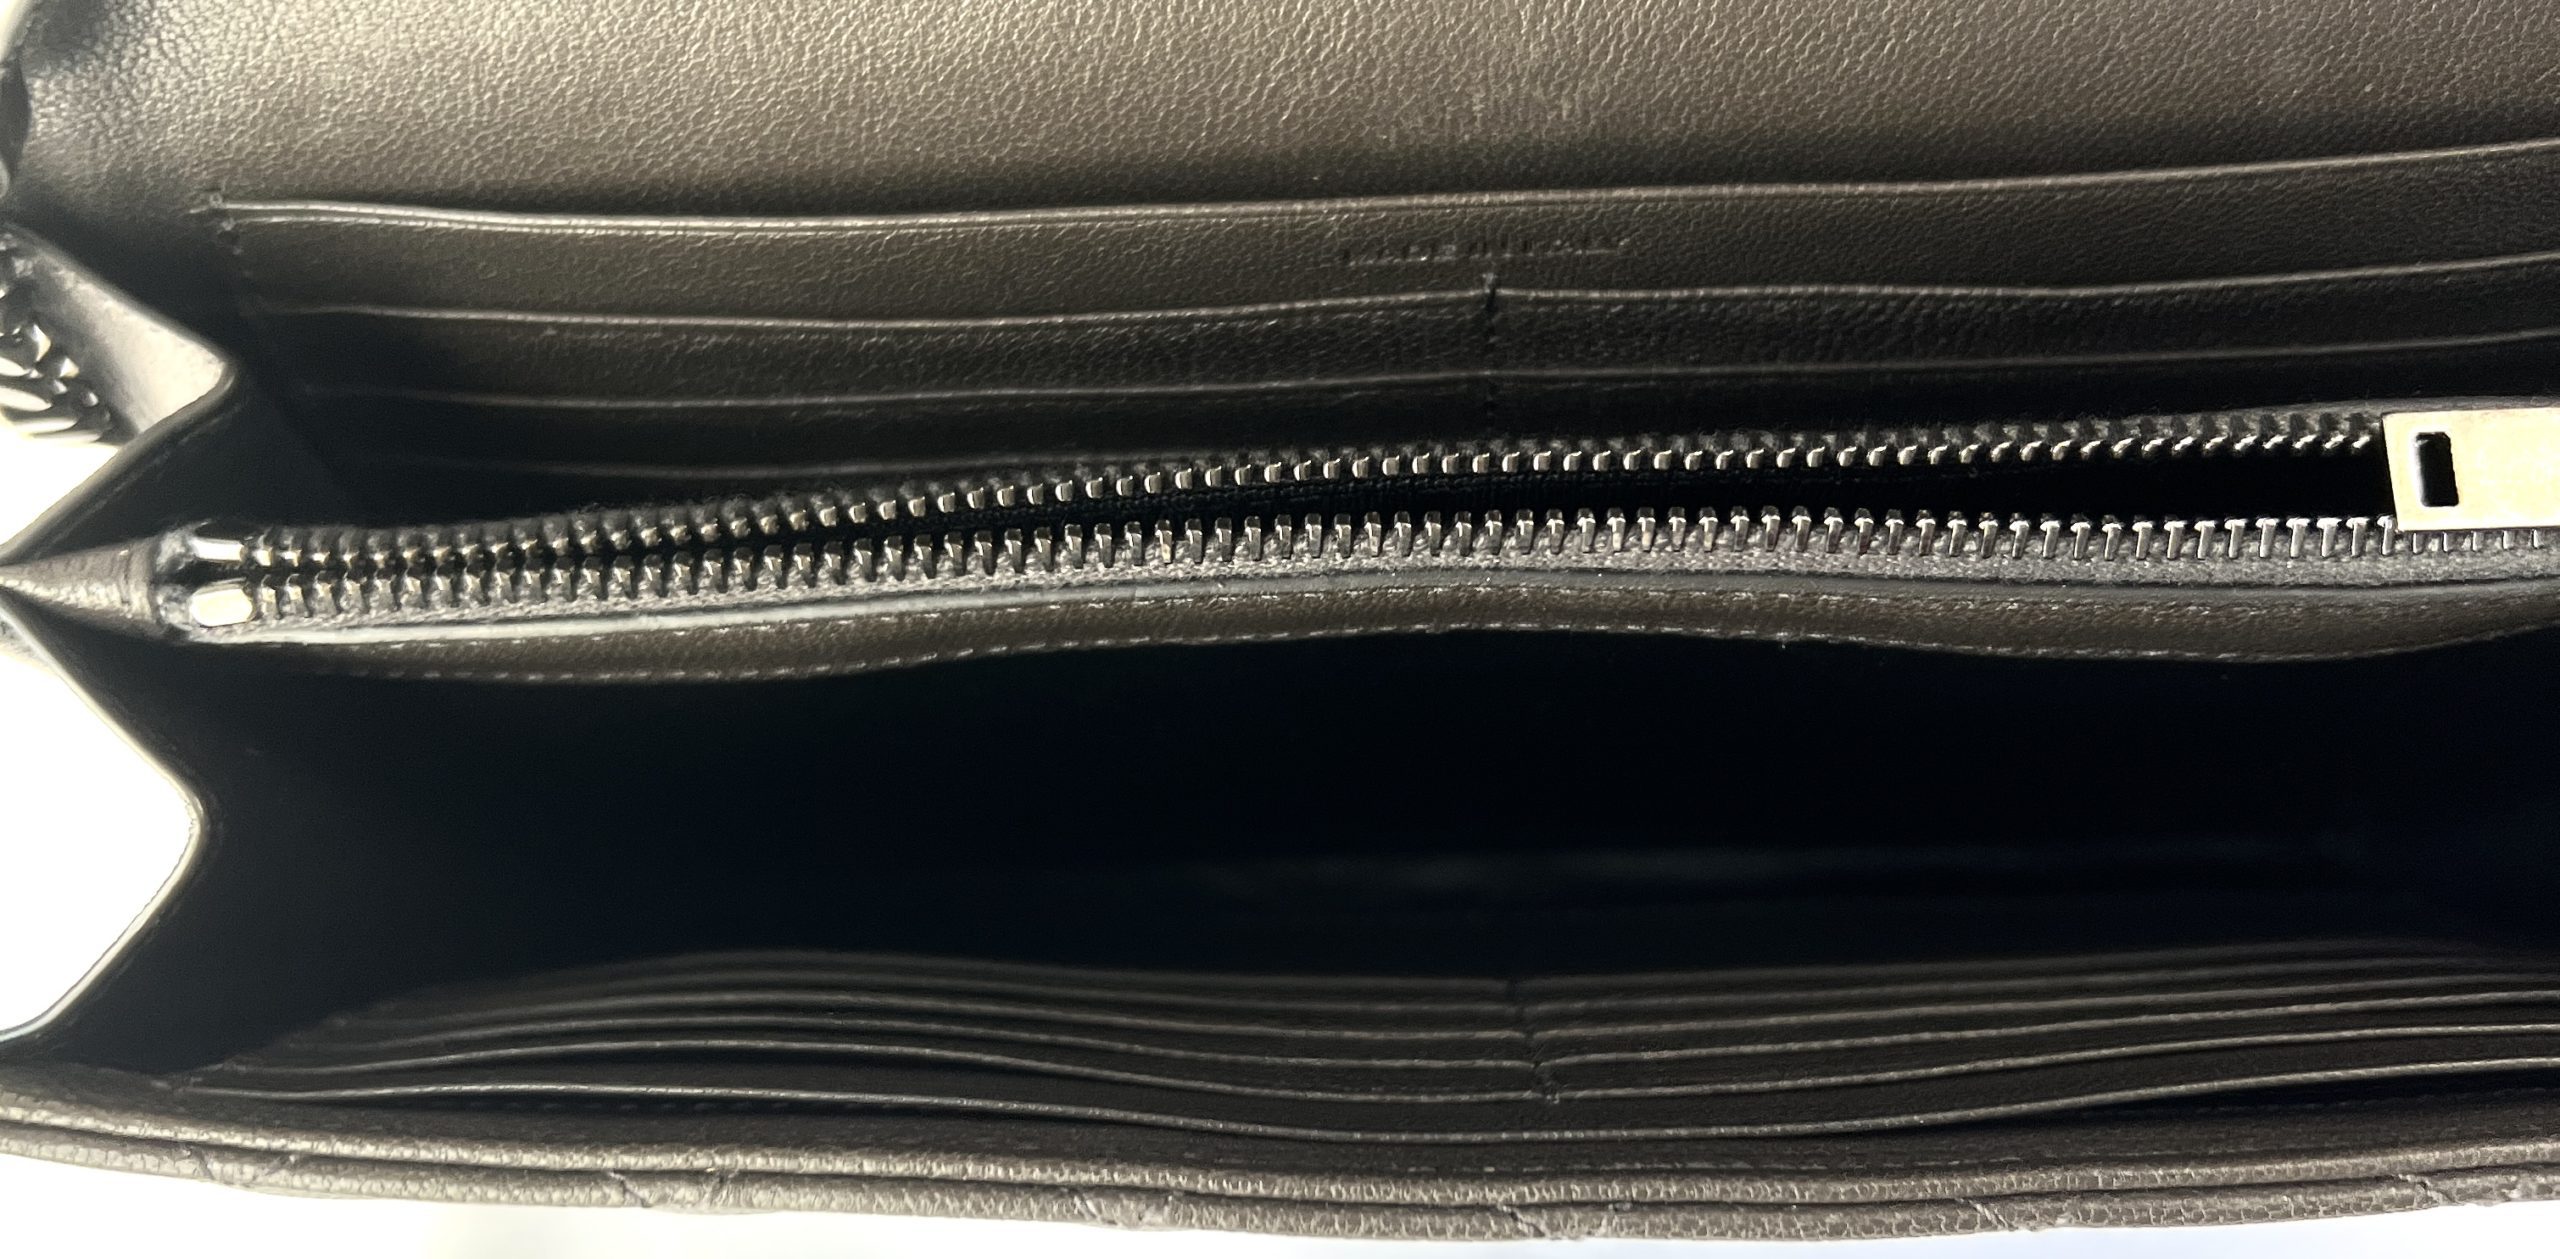 SAINT LAURENT Black envelope wallet with silver monogram